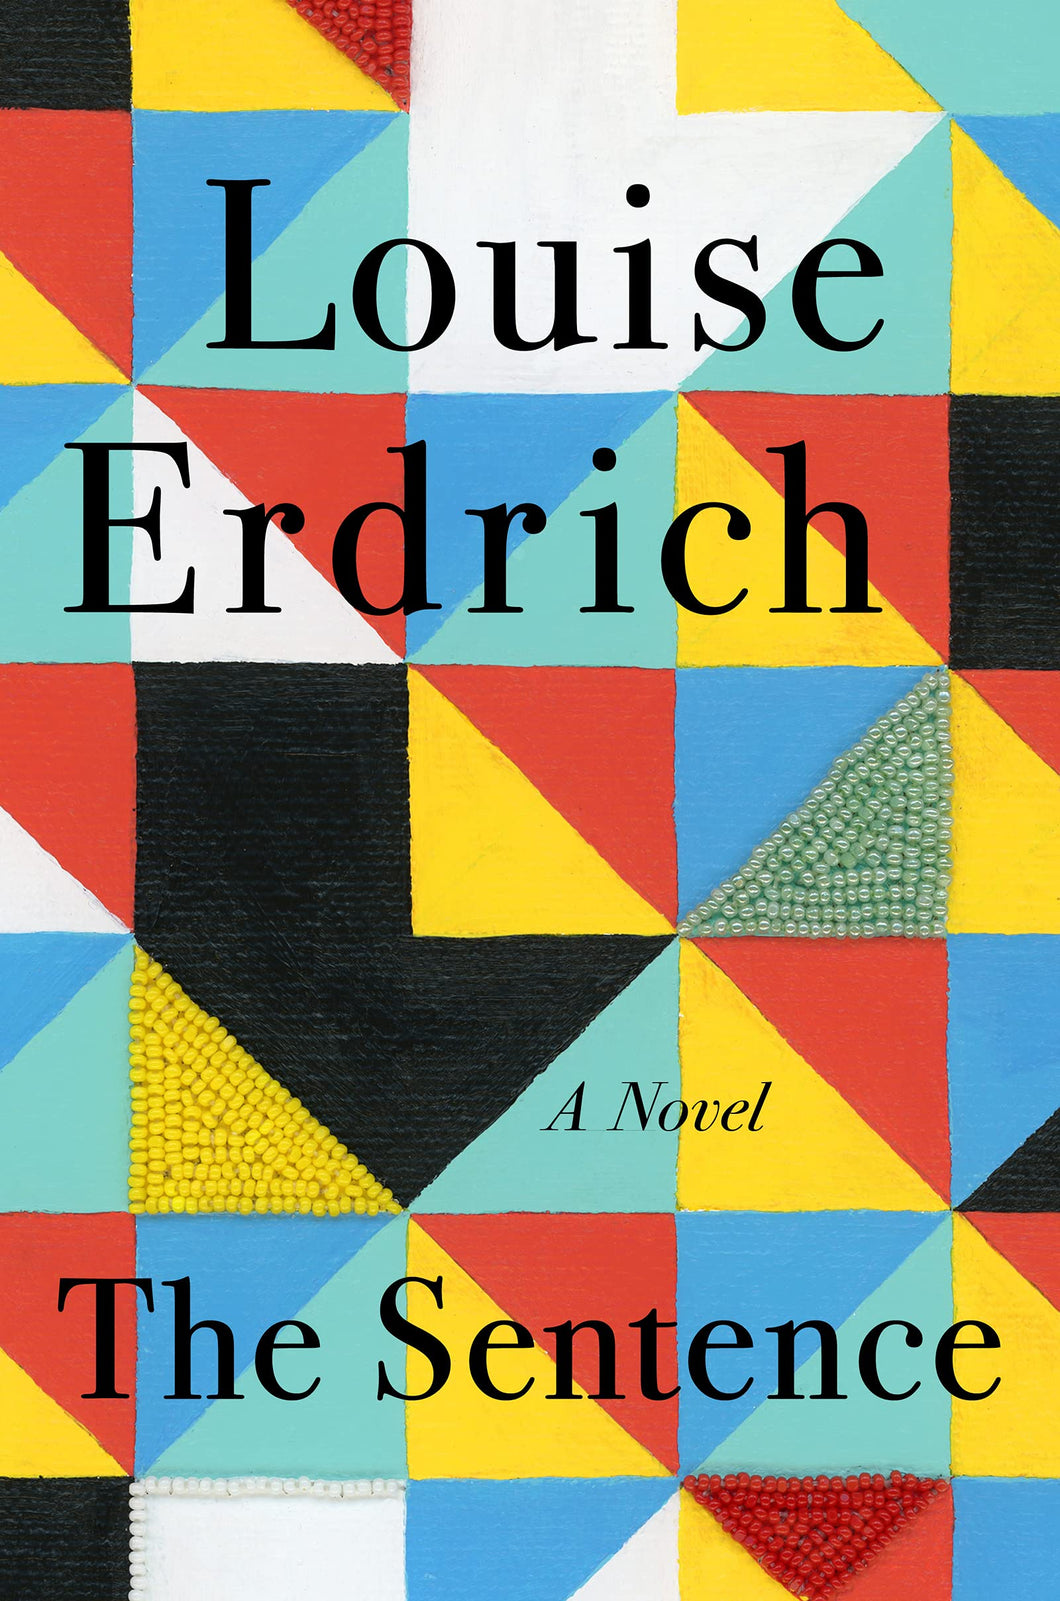 The Sentence [Louise Erdrich]